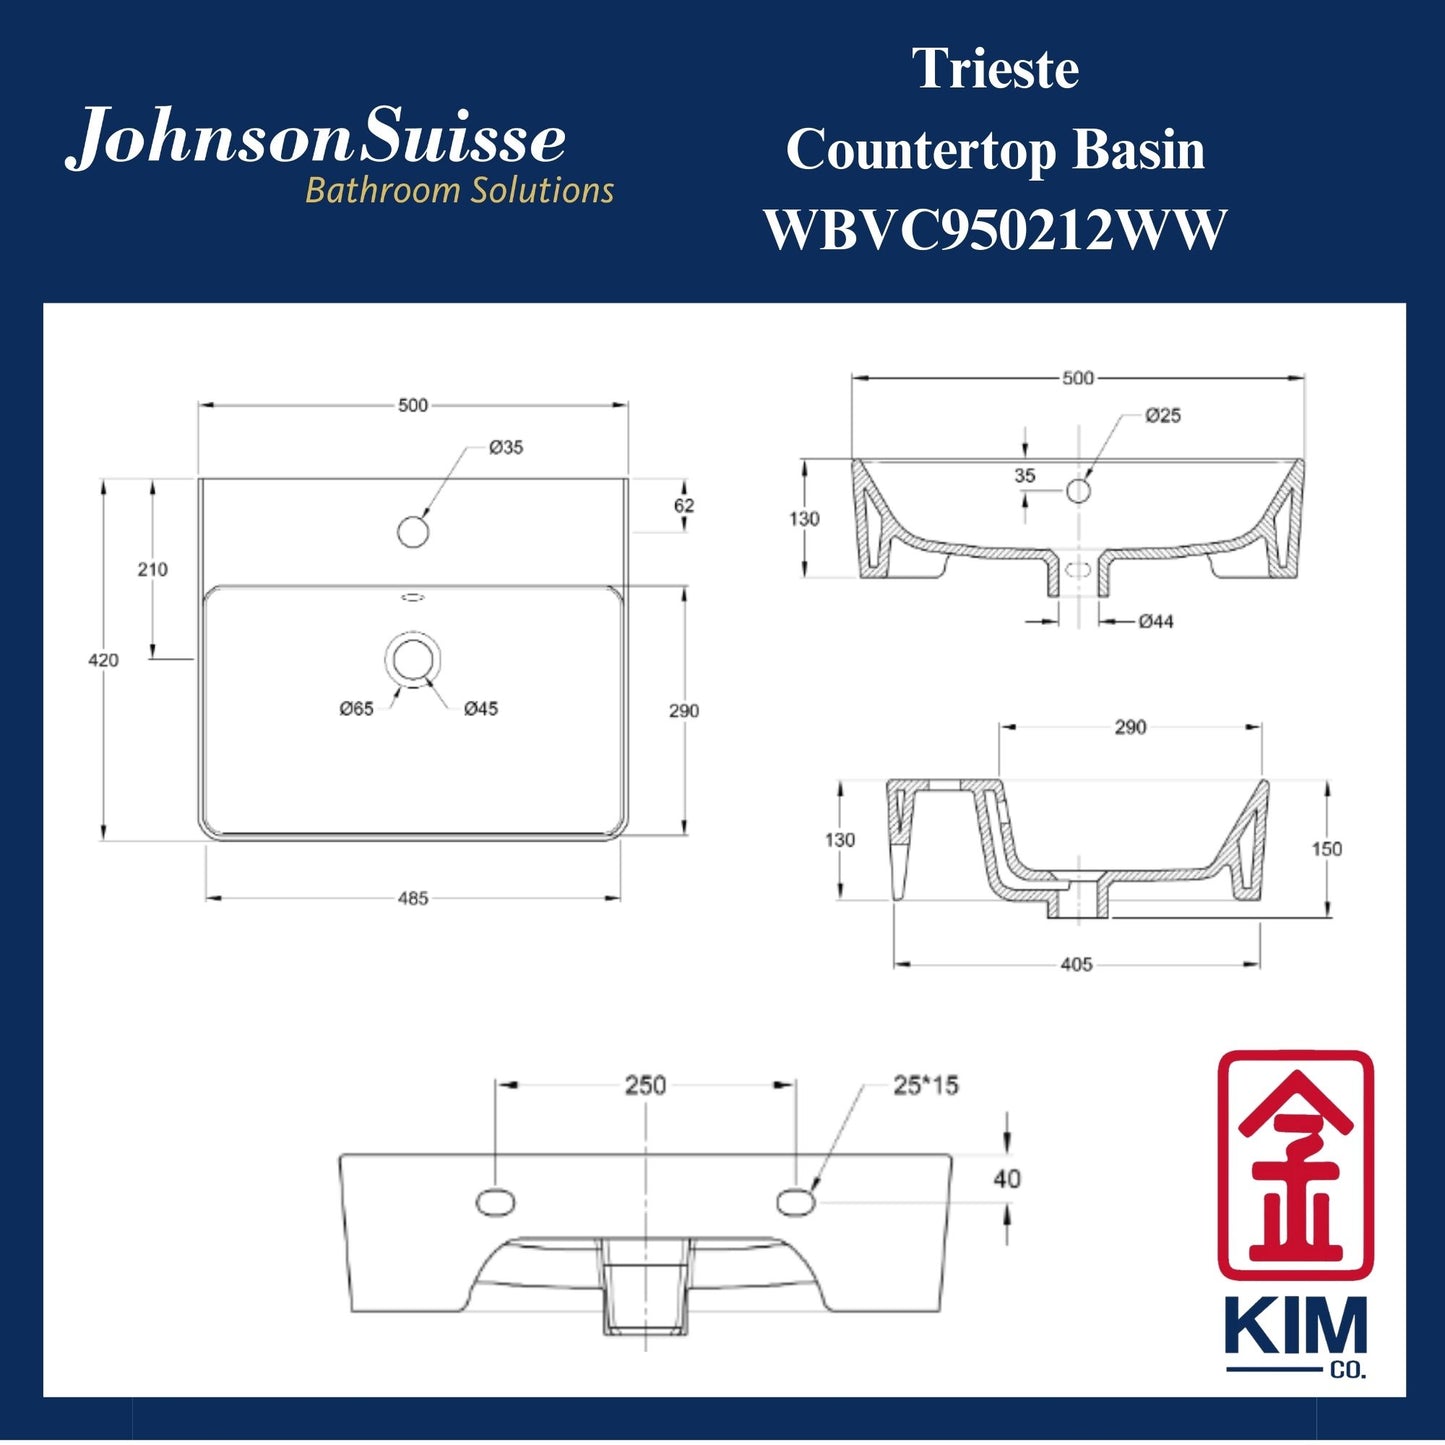 Johnson Suisse Trieste Countertop Basin (WBVC950212WW)